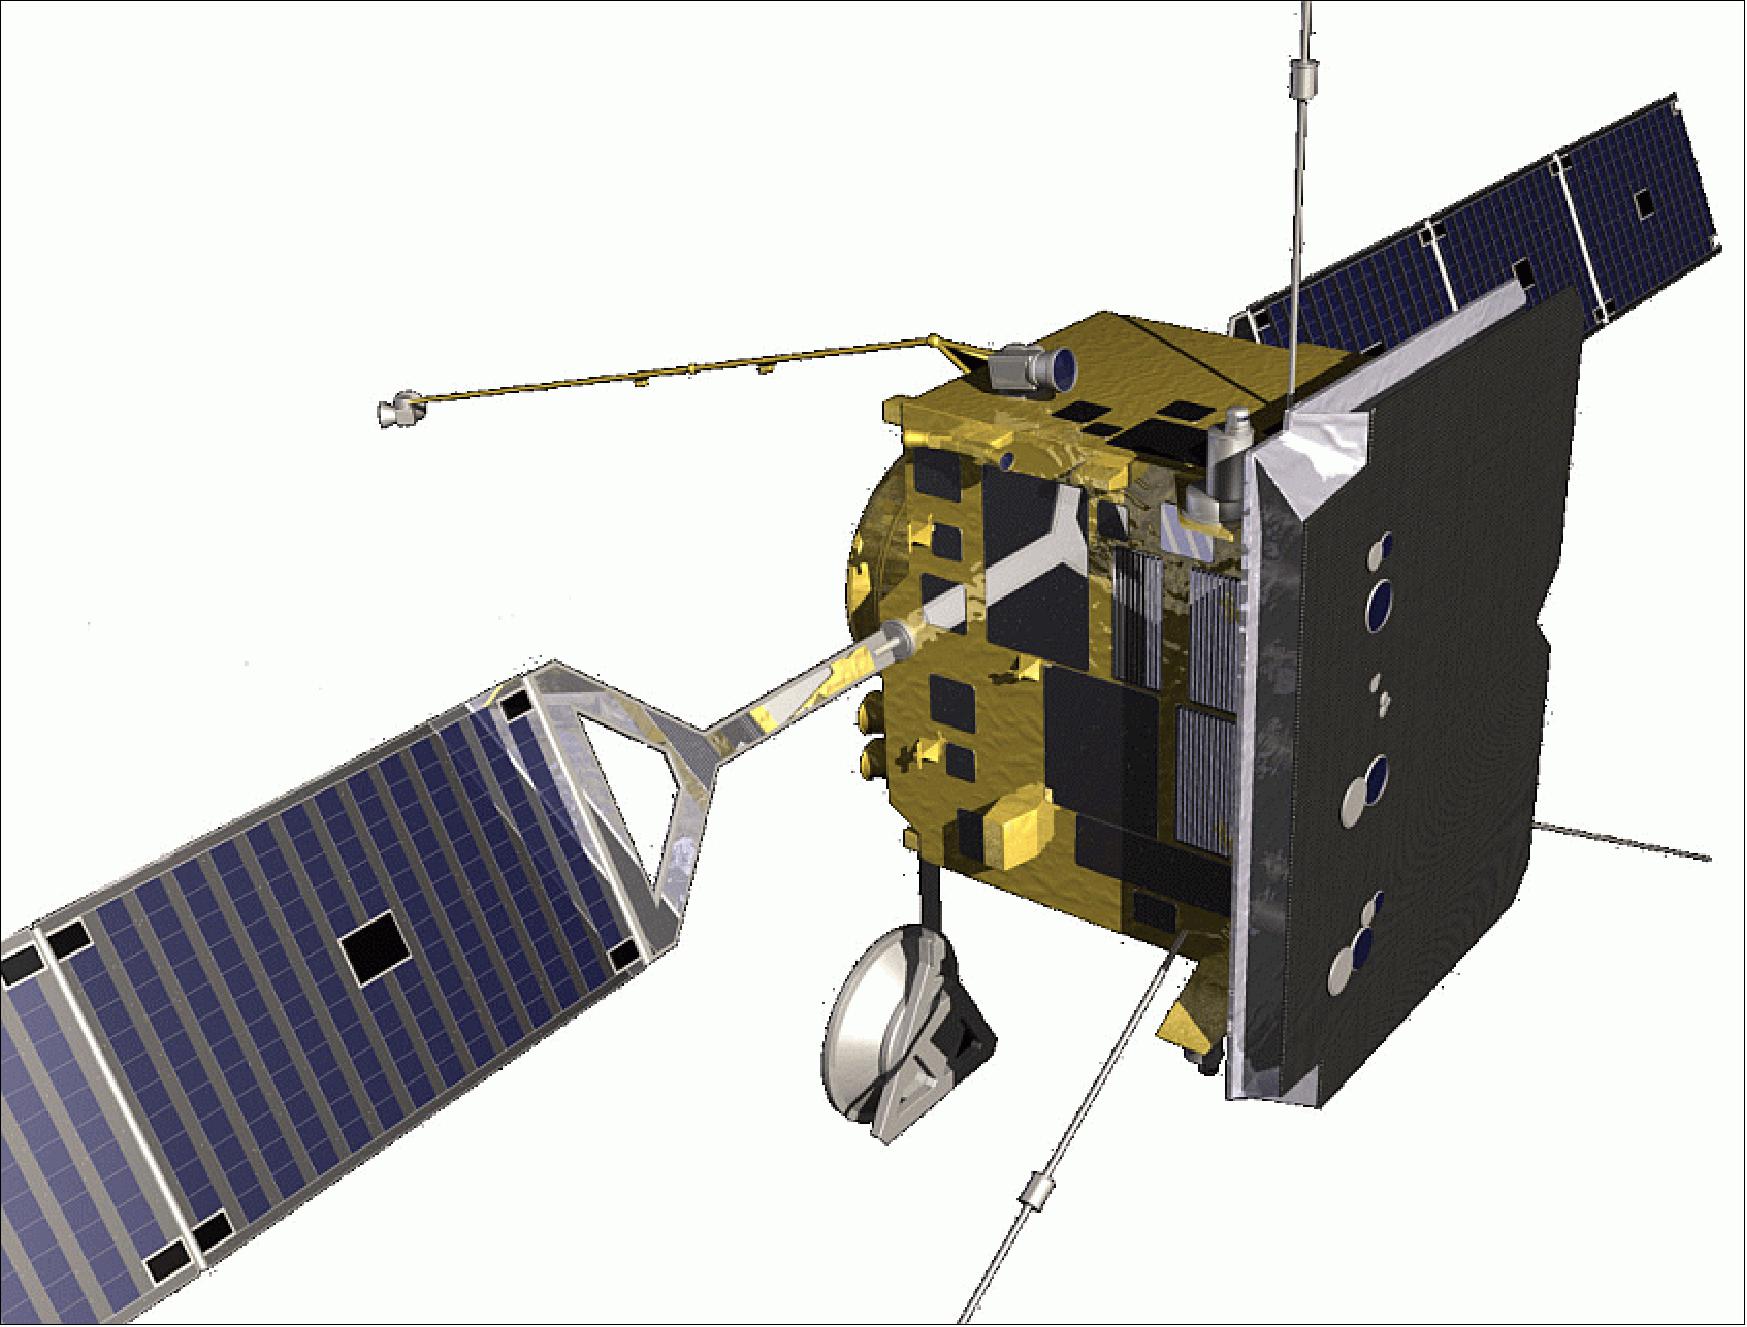 Figure 11: Illustration of the deployed Solar Orbiter spacecraft (image credit: Airbus DS, ESA)